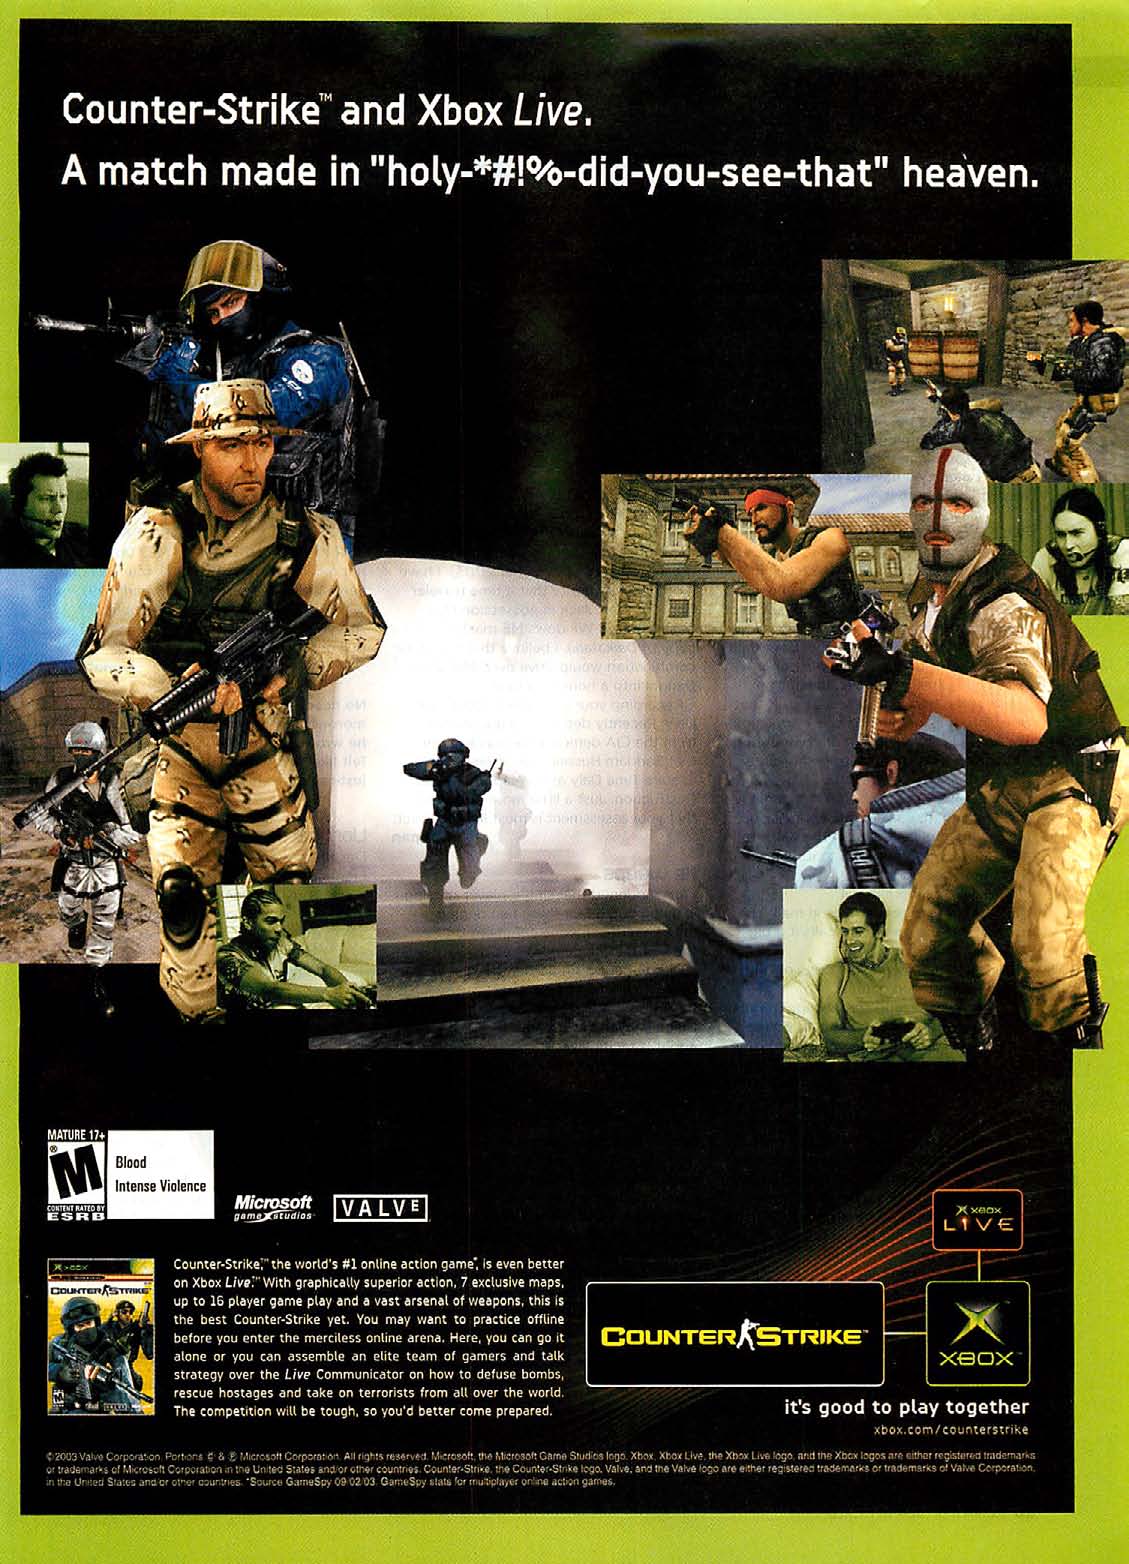  Counter-Strike - Xbox : Video Games